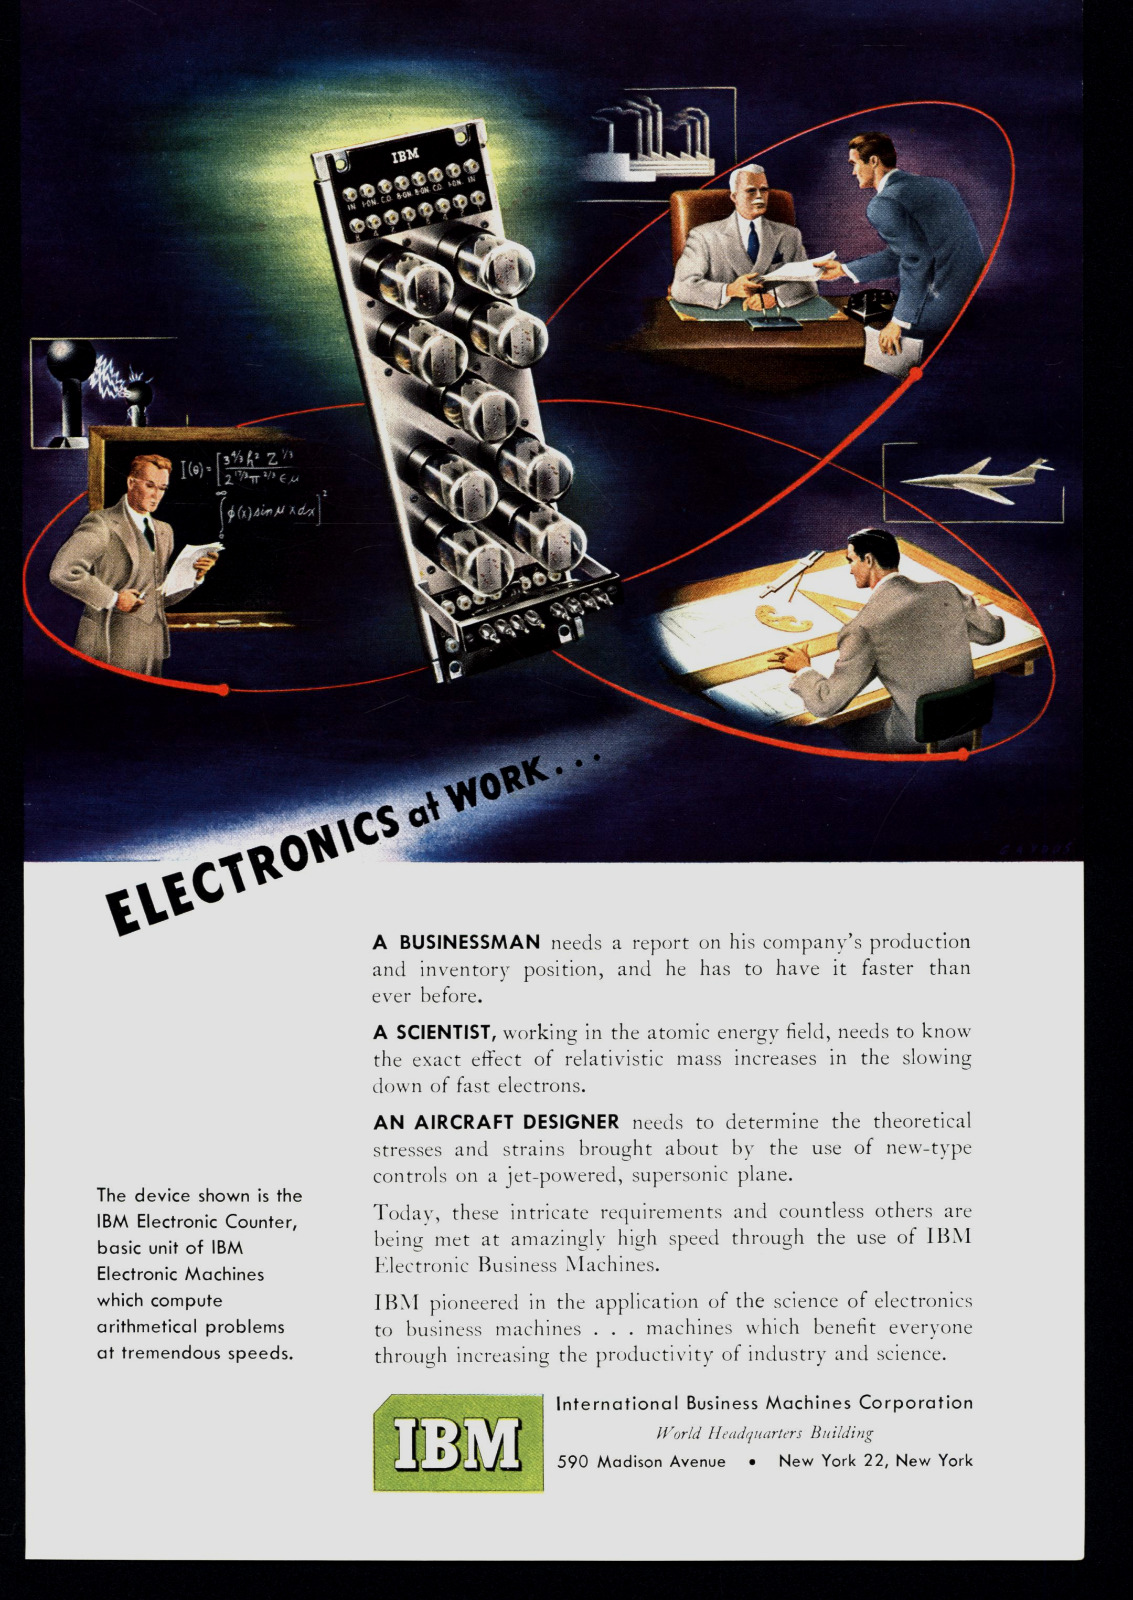 1950 IBM ATOMIC ENERGY FIELD AIRCRAFT DESIGNER SCIENTIST VINTAGE PRINT AD